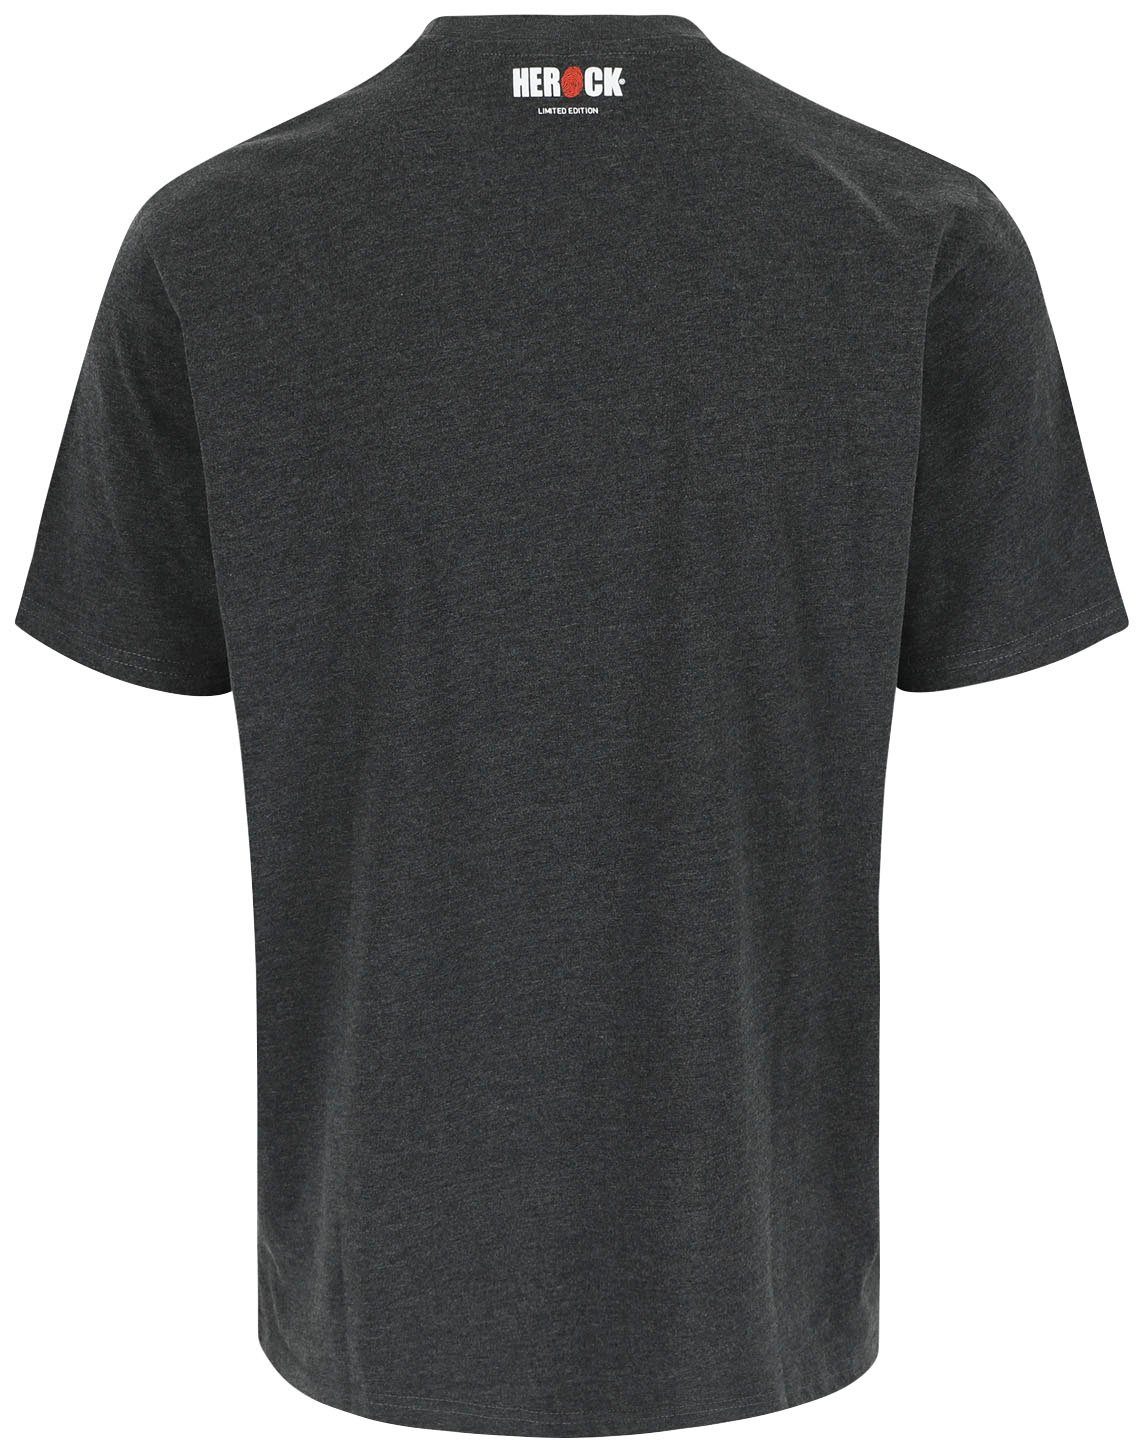 Herock T-Shirt Maximus Limited Edition